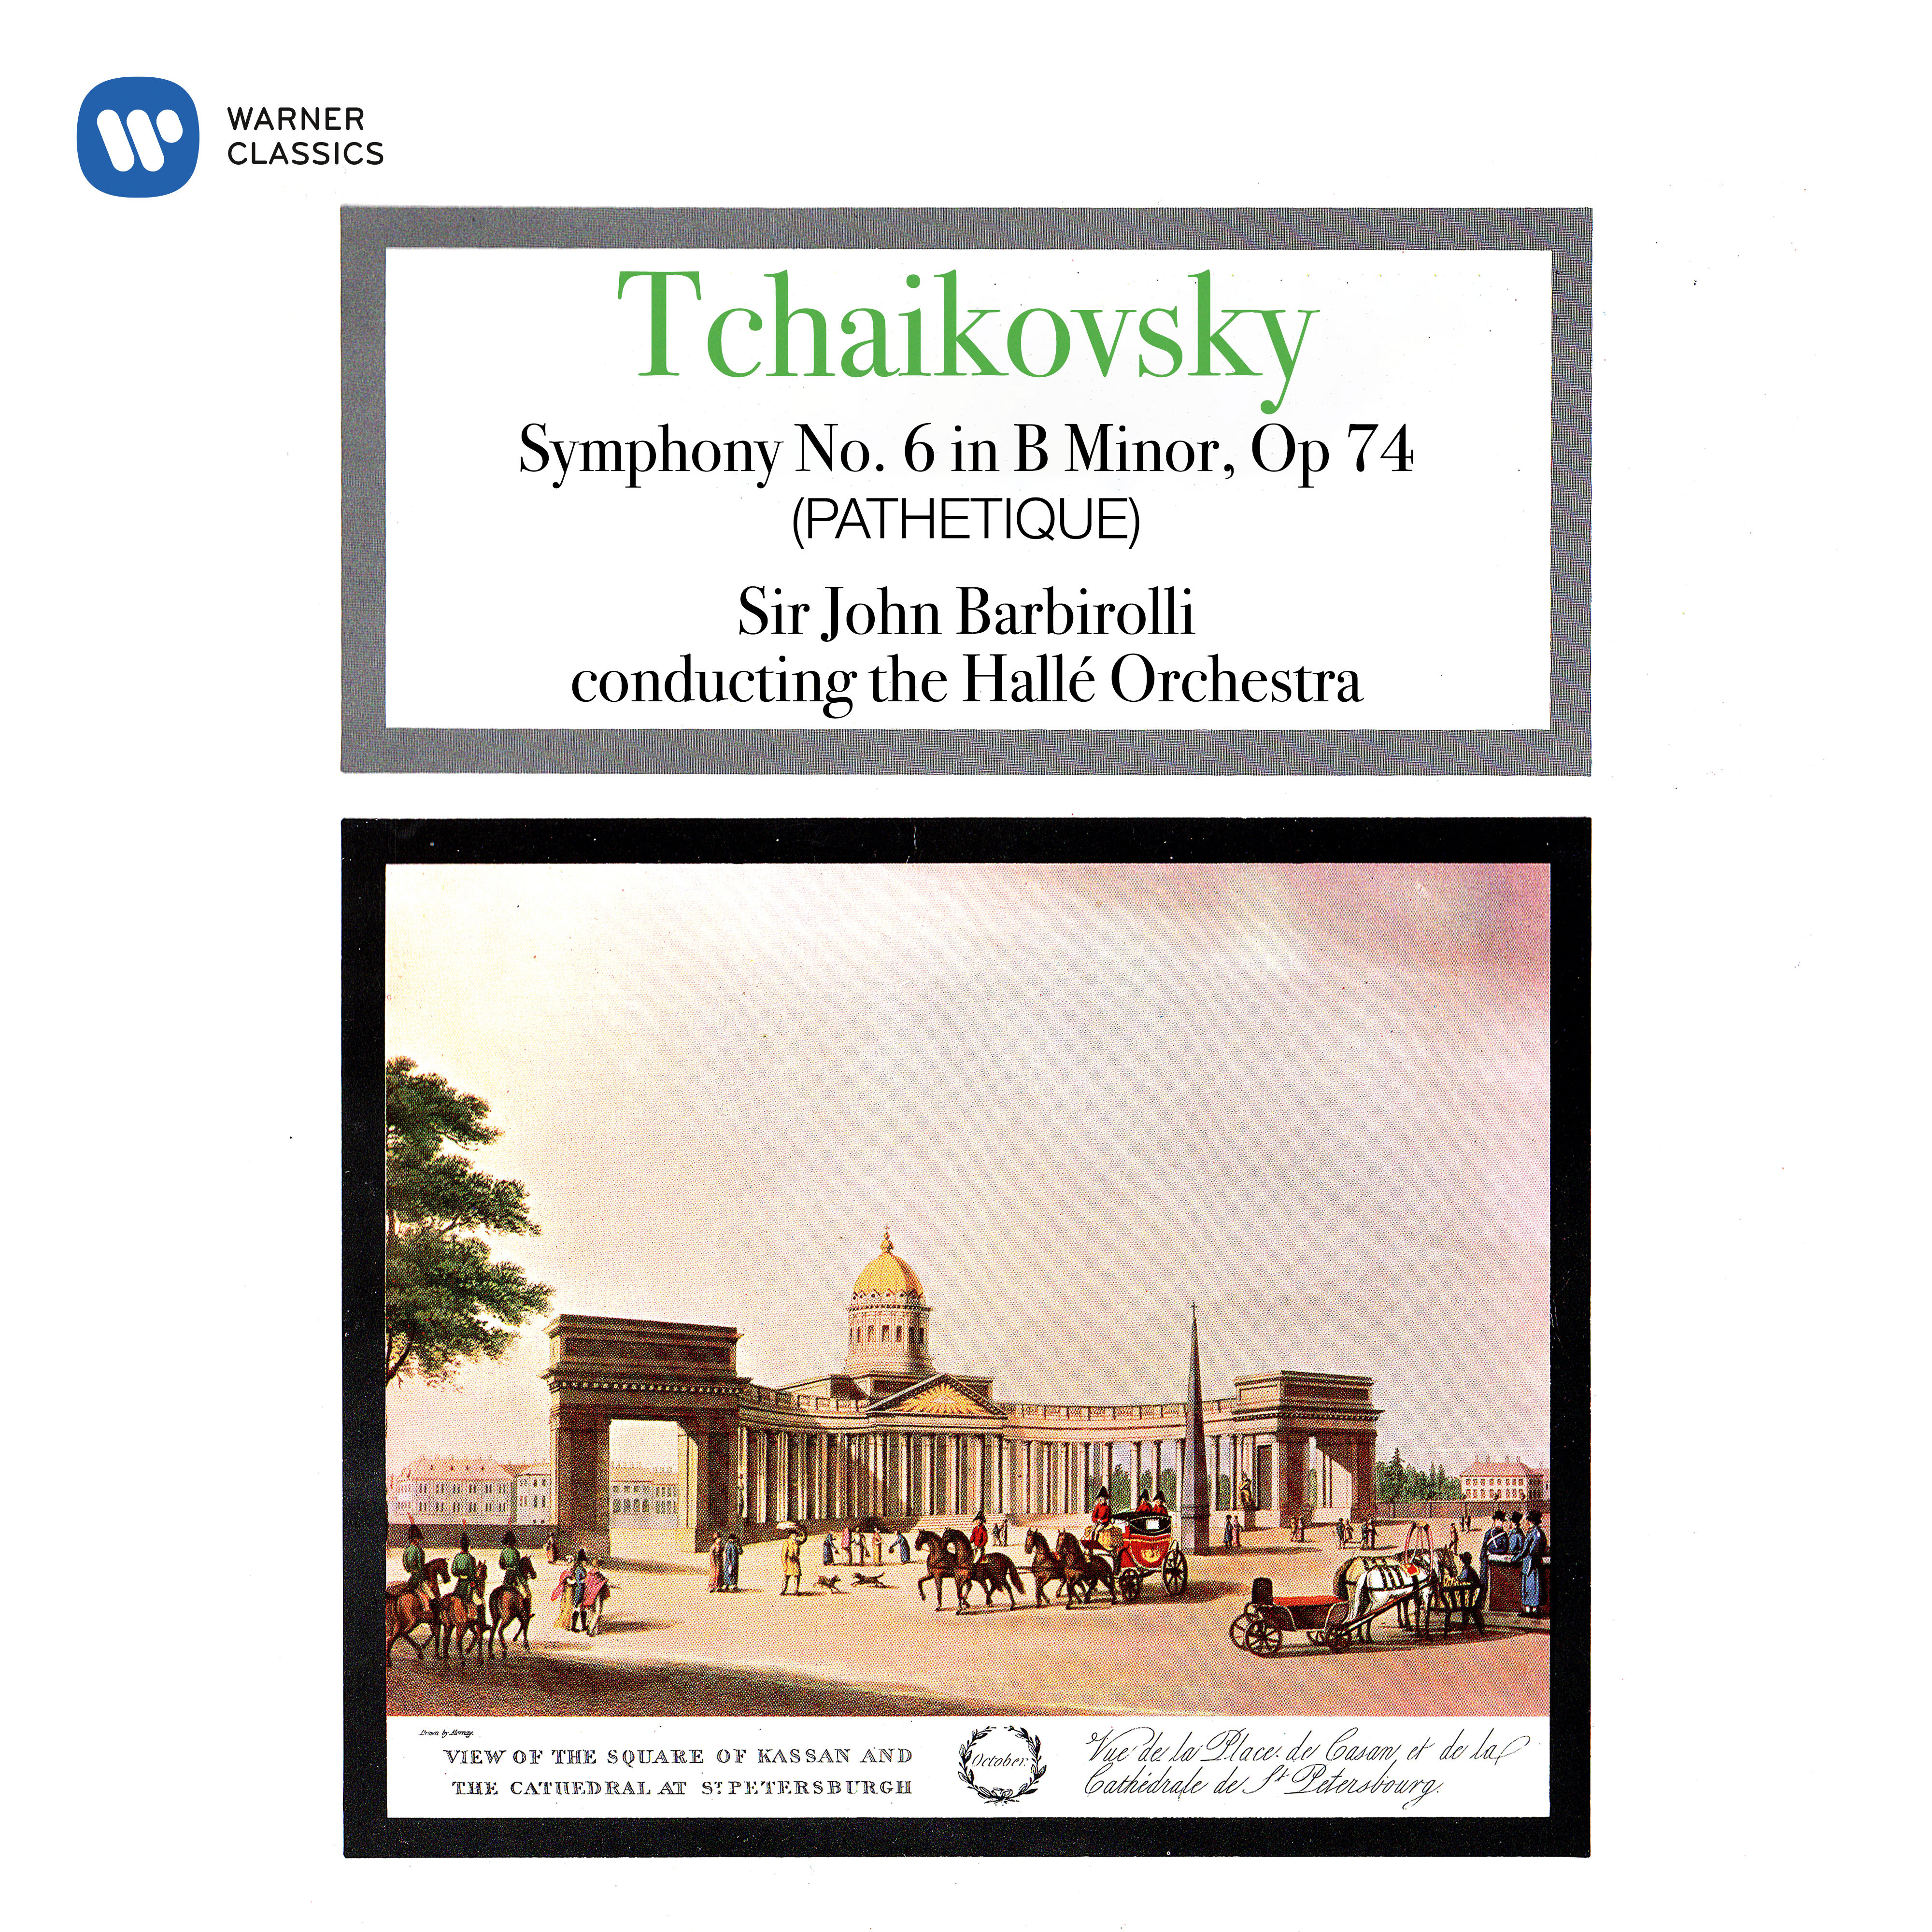 Sir John Barbirolli – Tchaikovsky- Symphony No. 6, Op. 74 -Pathétique-